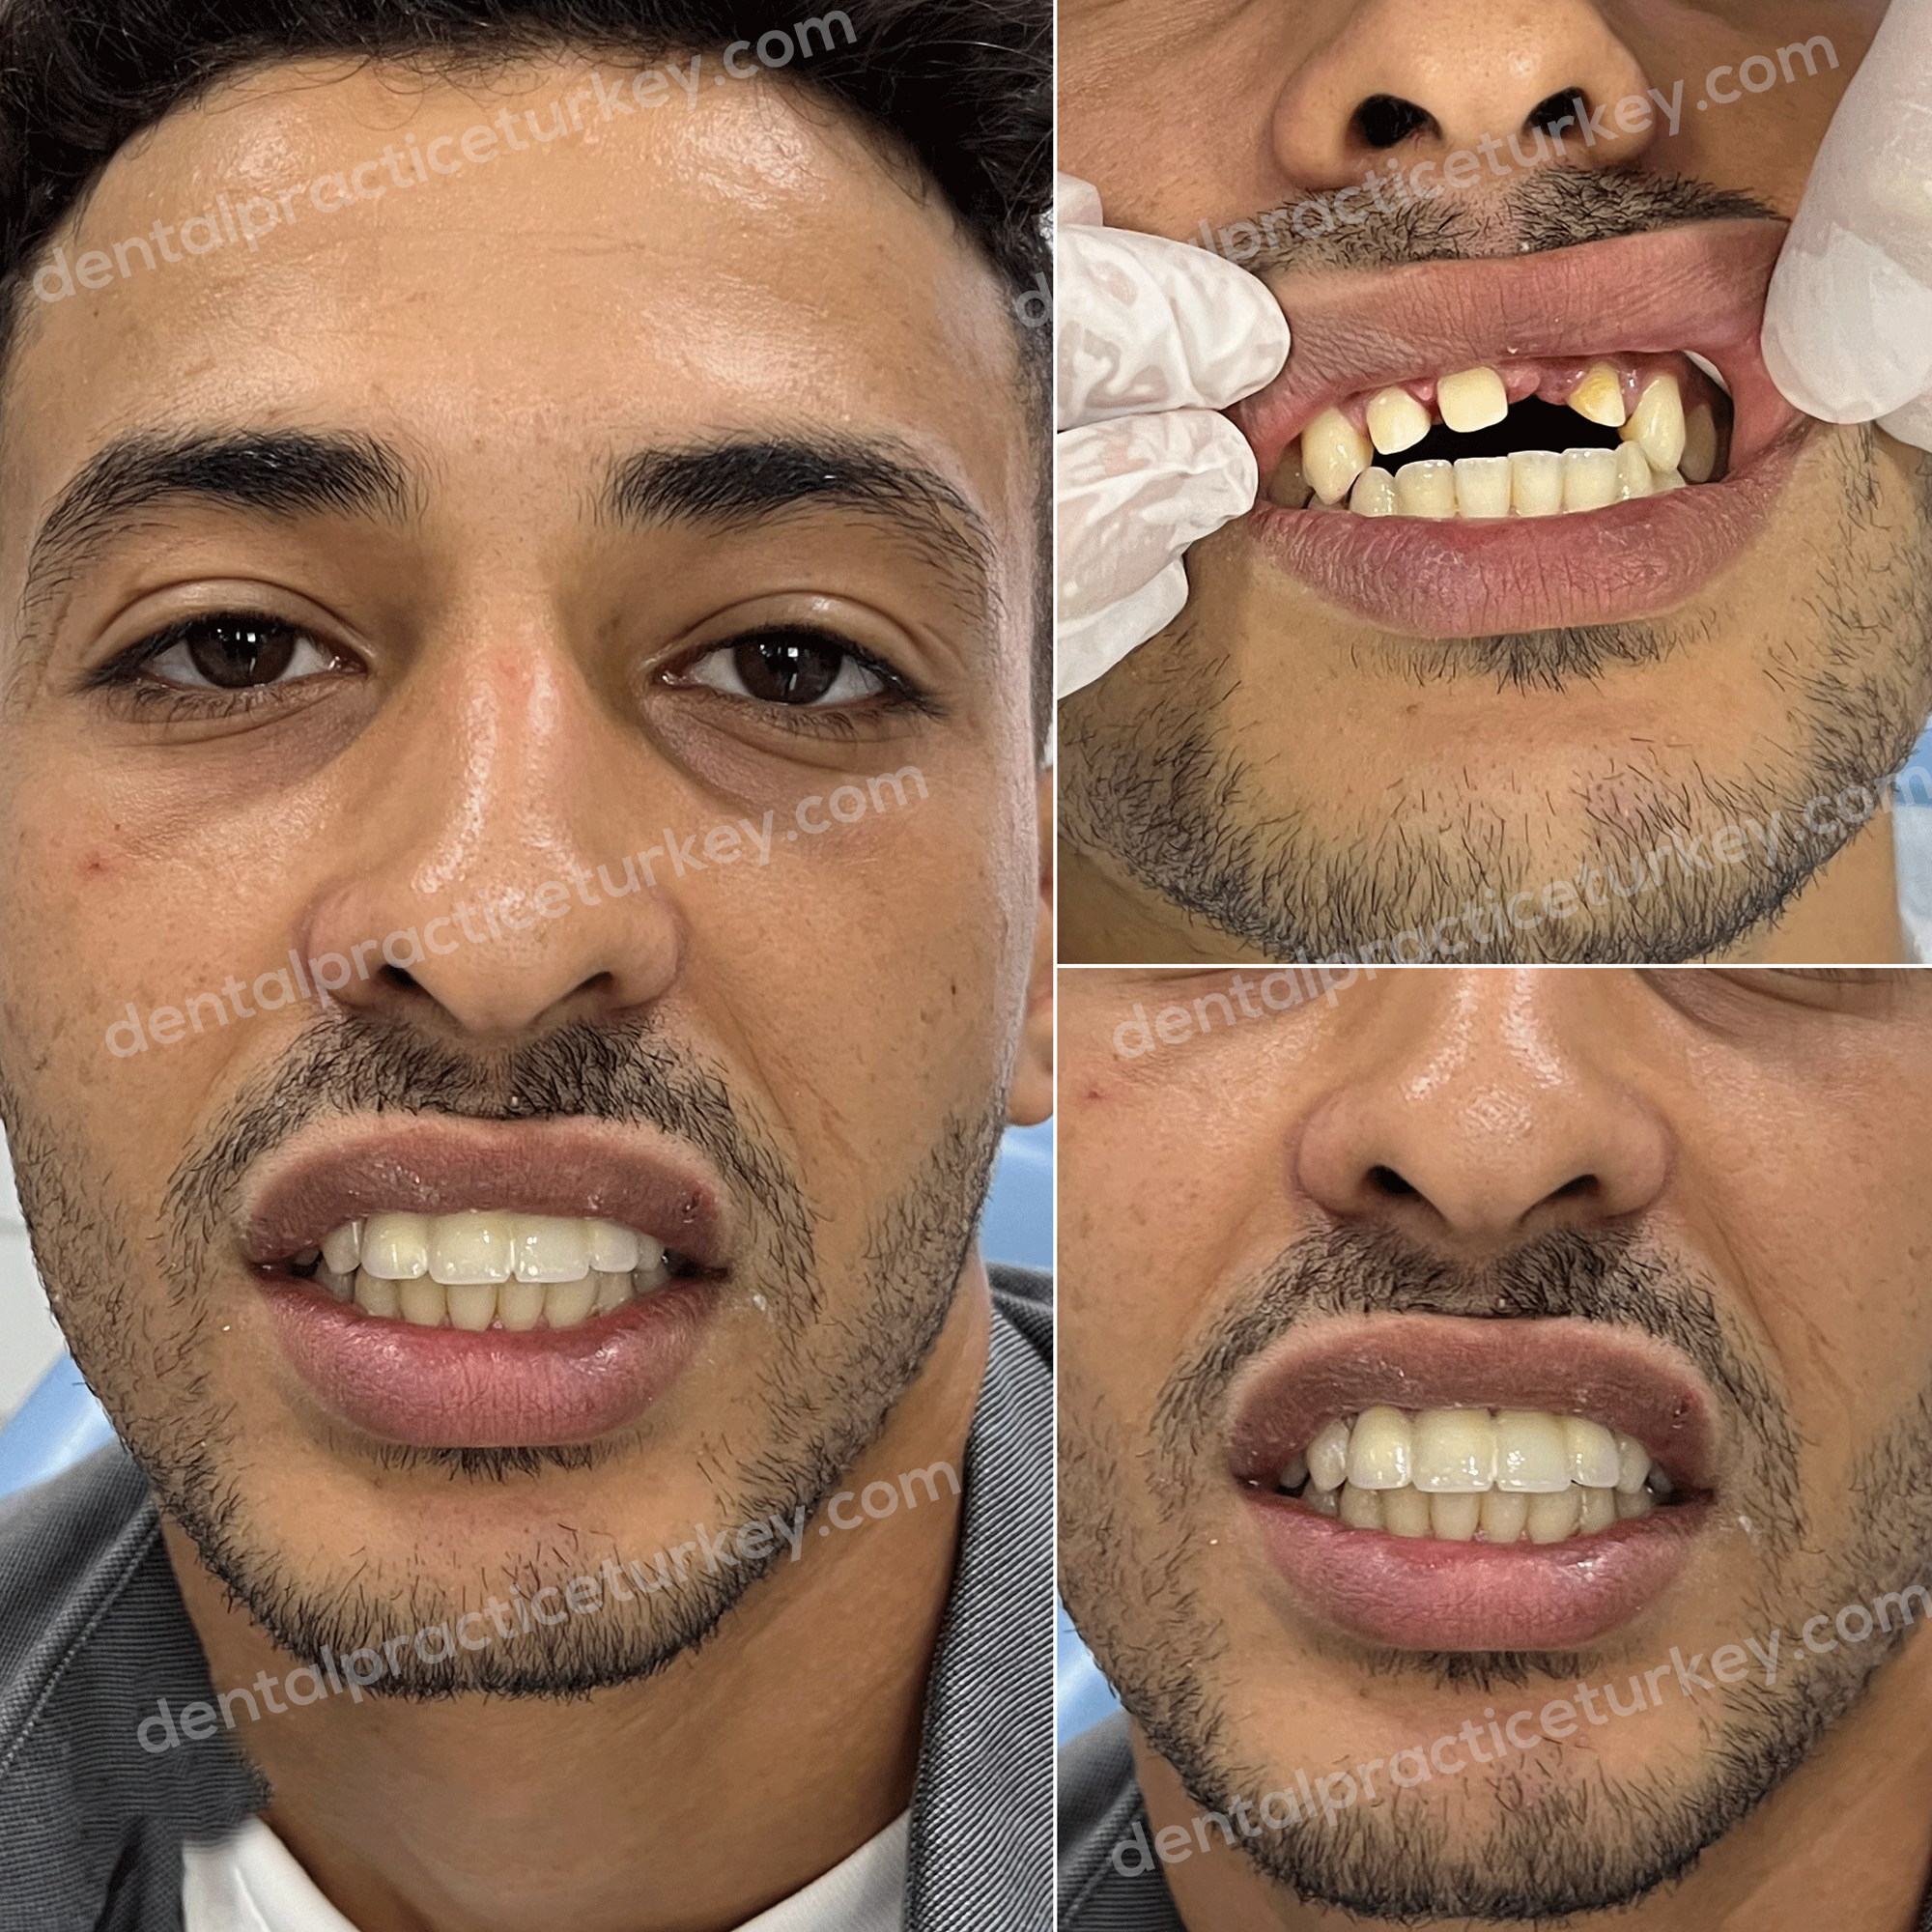 Dental Implants before after 1